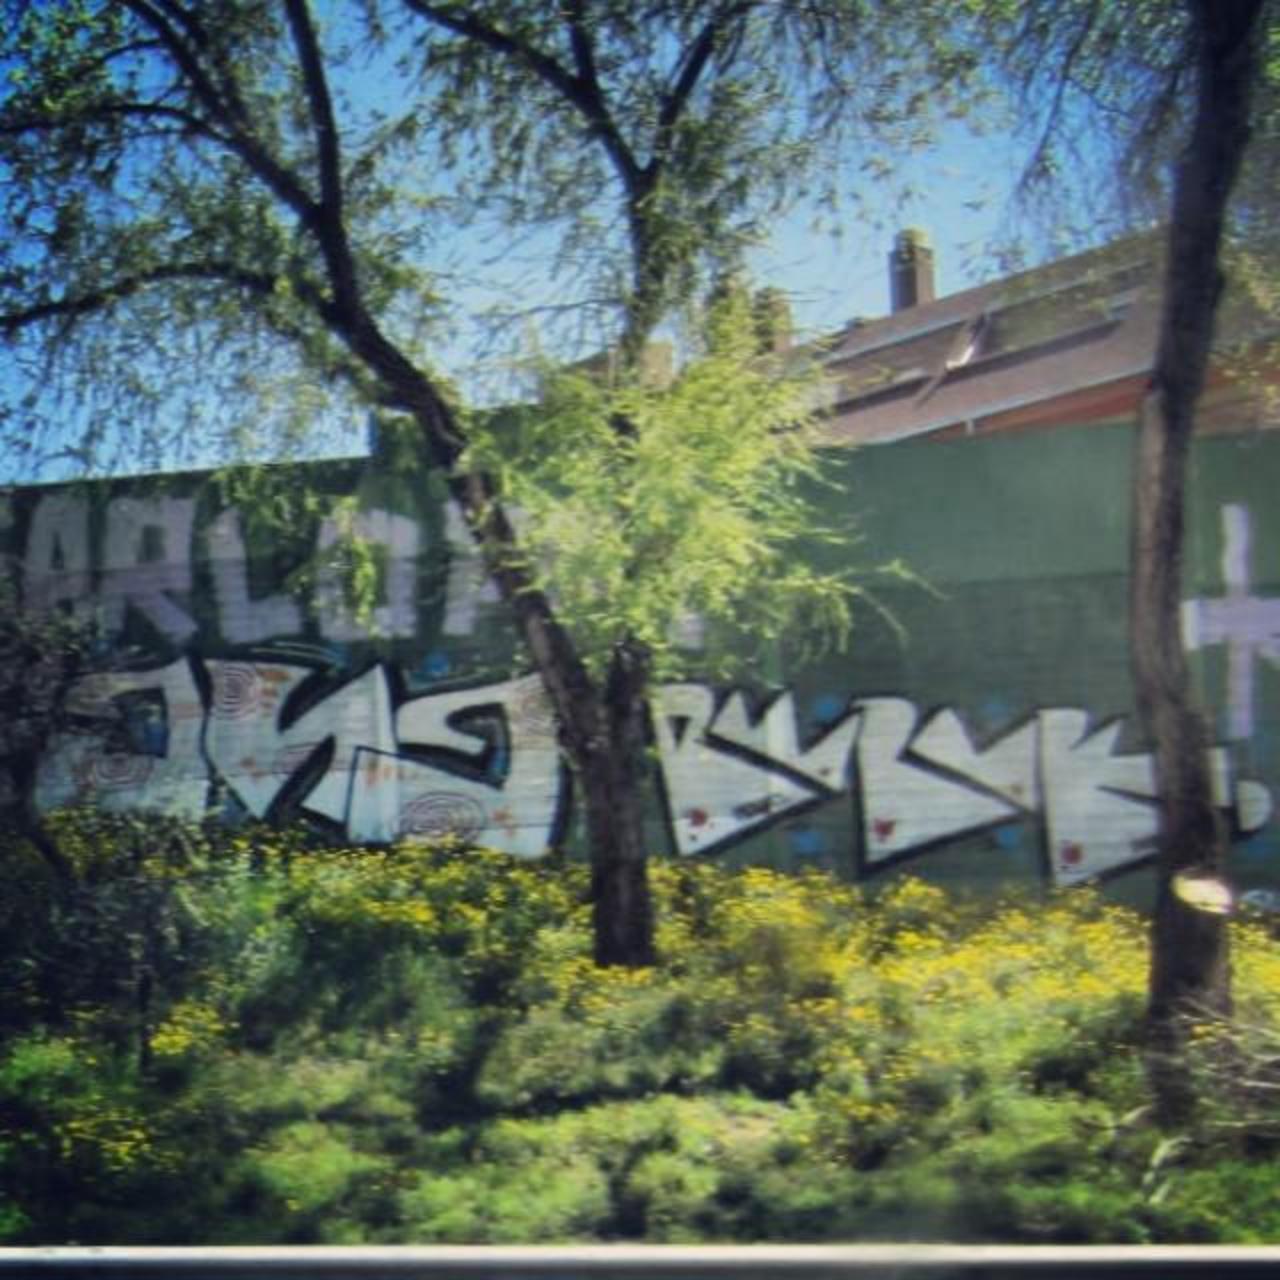 via #redesycalles "http://bit.ly/1jTU7mh" #graffiti #streetart http://t.co/TOrSHEwC3y